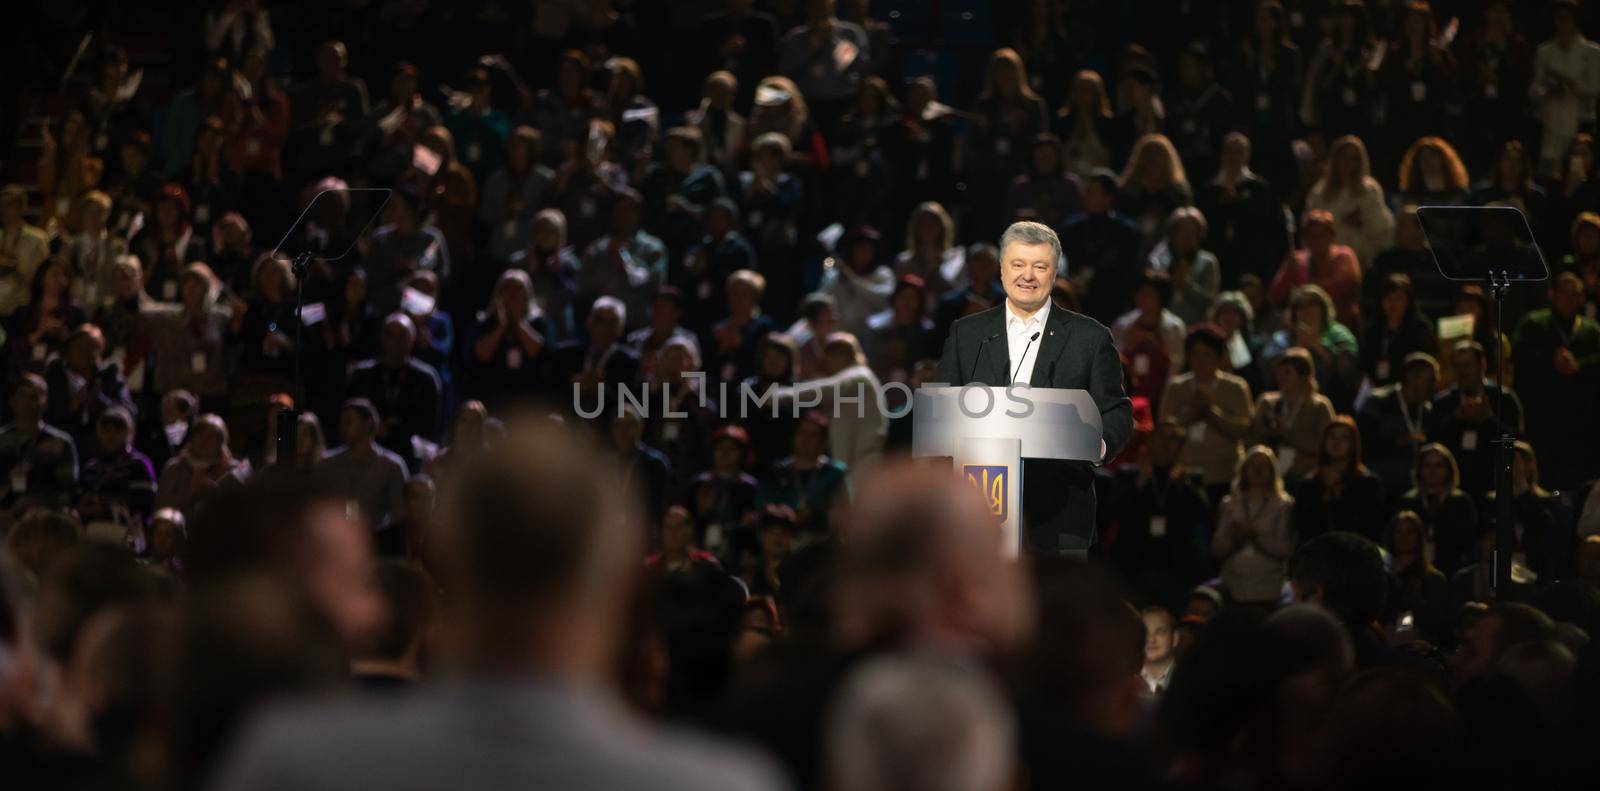 KIEV, UKRAINE - Feb. 09, 2019: President of Ukraine Petro Poroshenko during the Open Dialogue public forum in Kiev